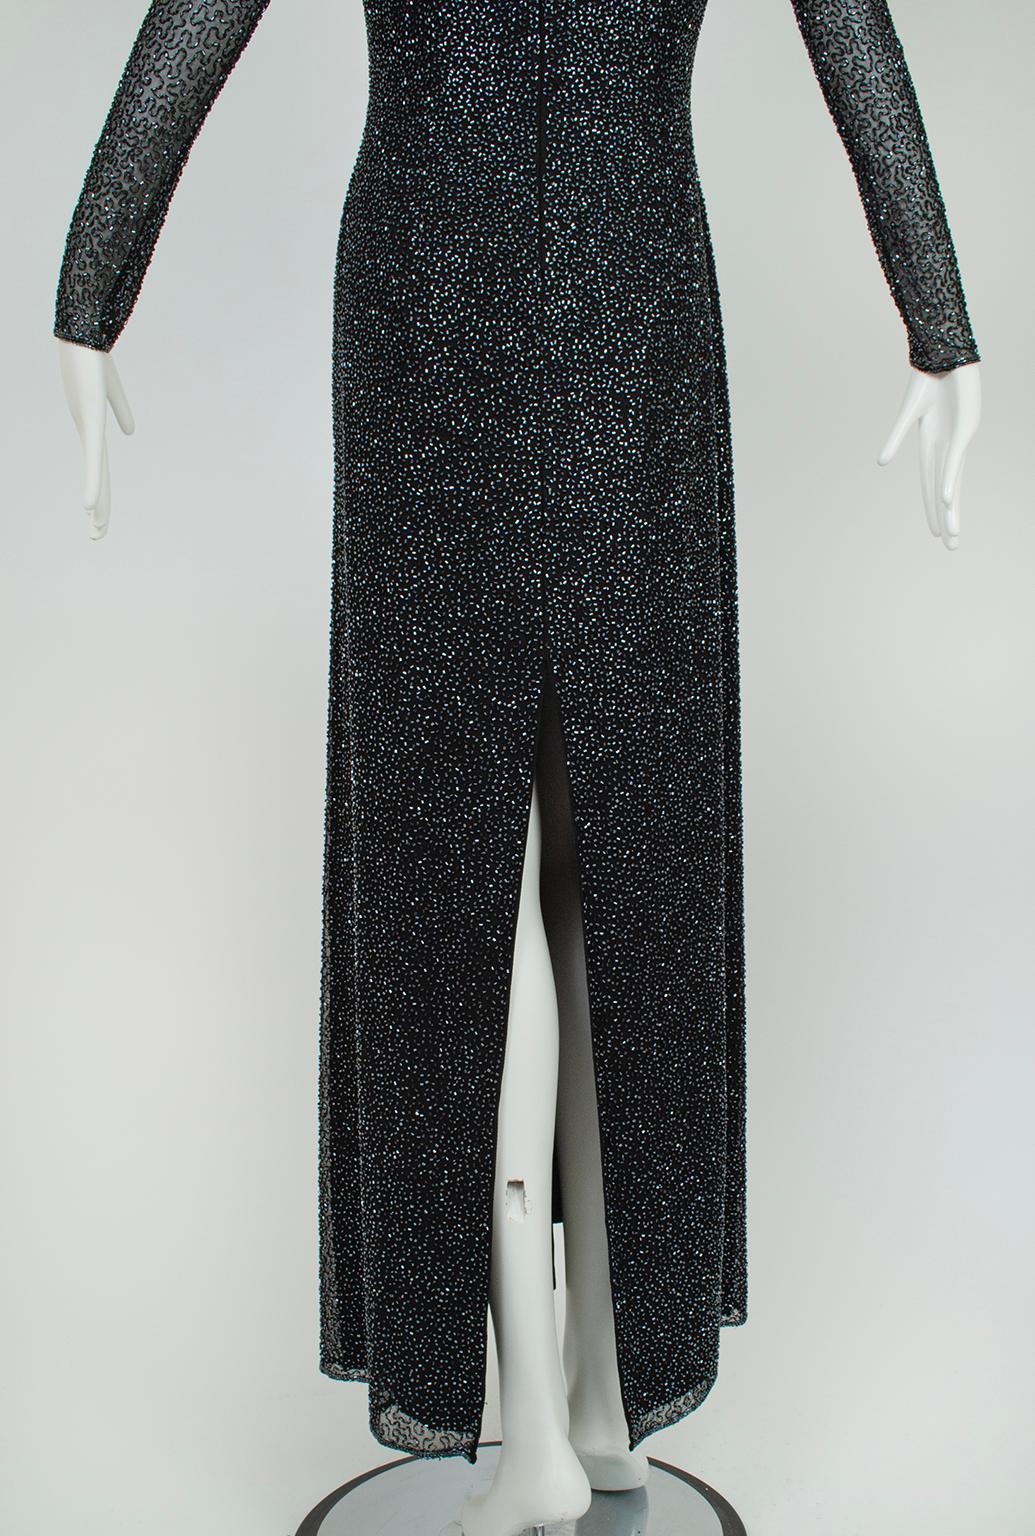 Lillie Rubin Black Full Length Beaded Column Gown w Illusion Sleeves – L, 21st C For Sale 6